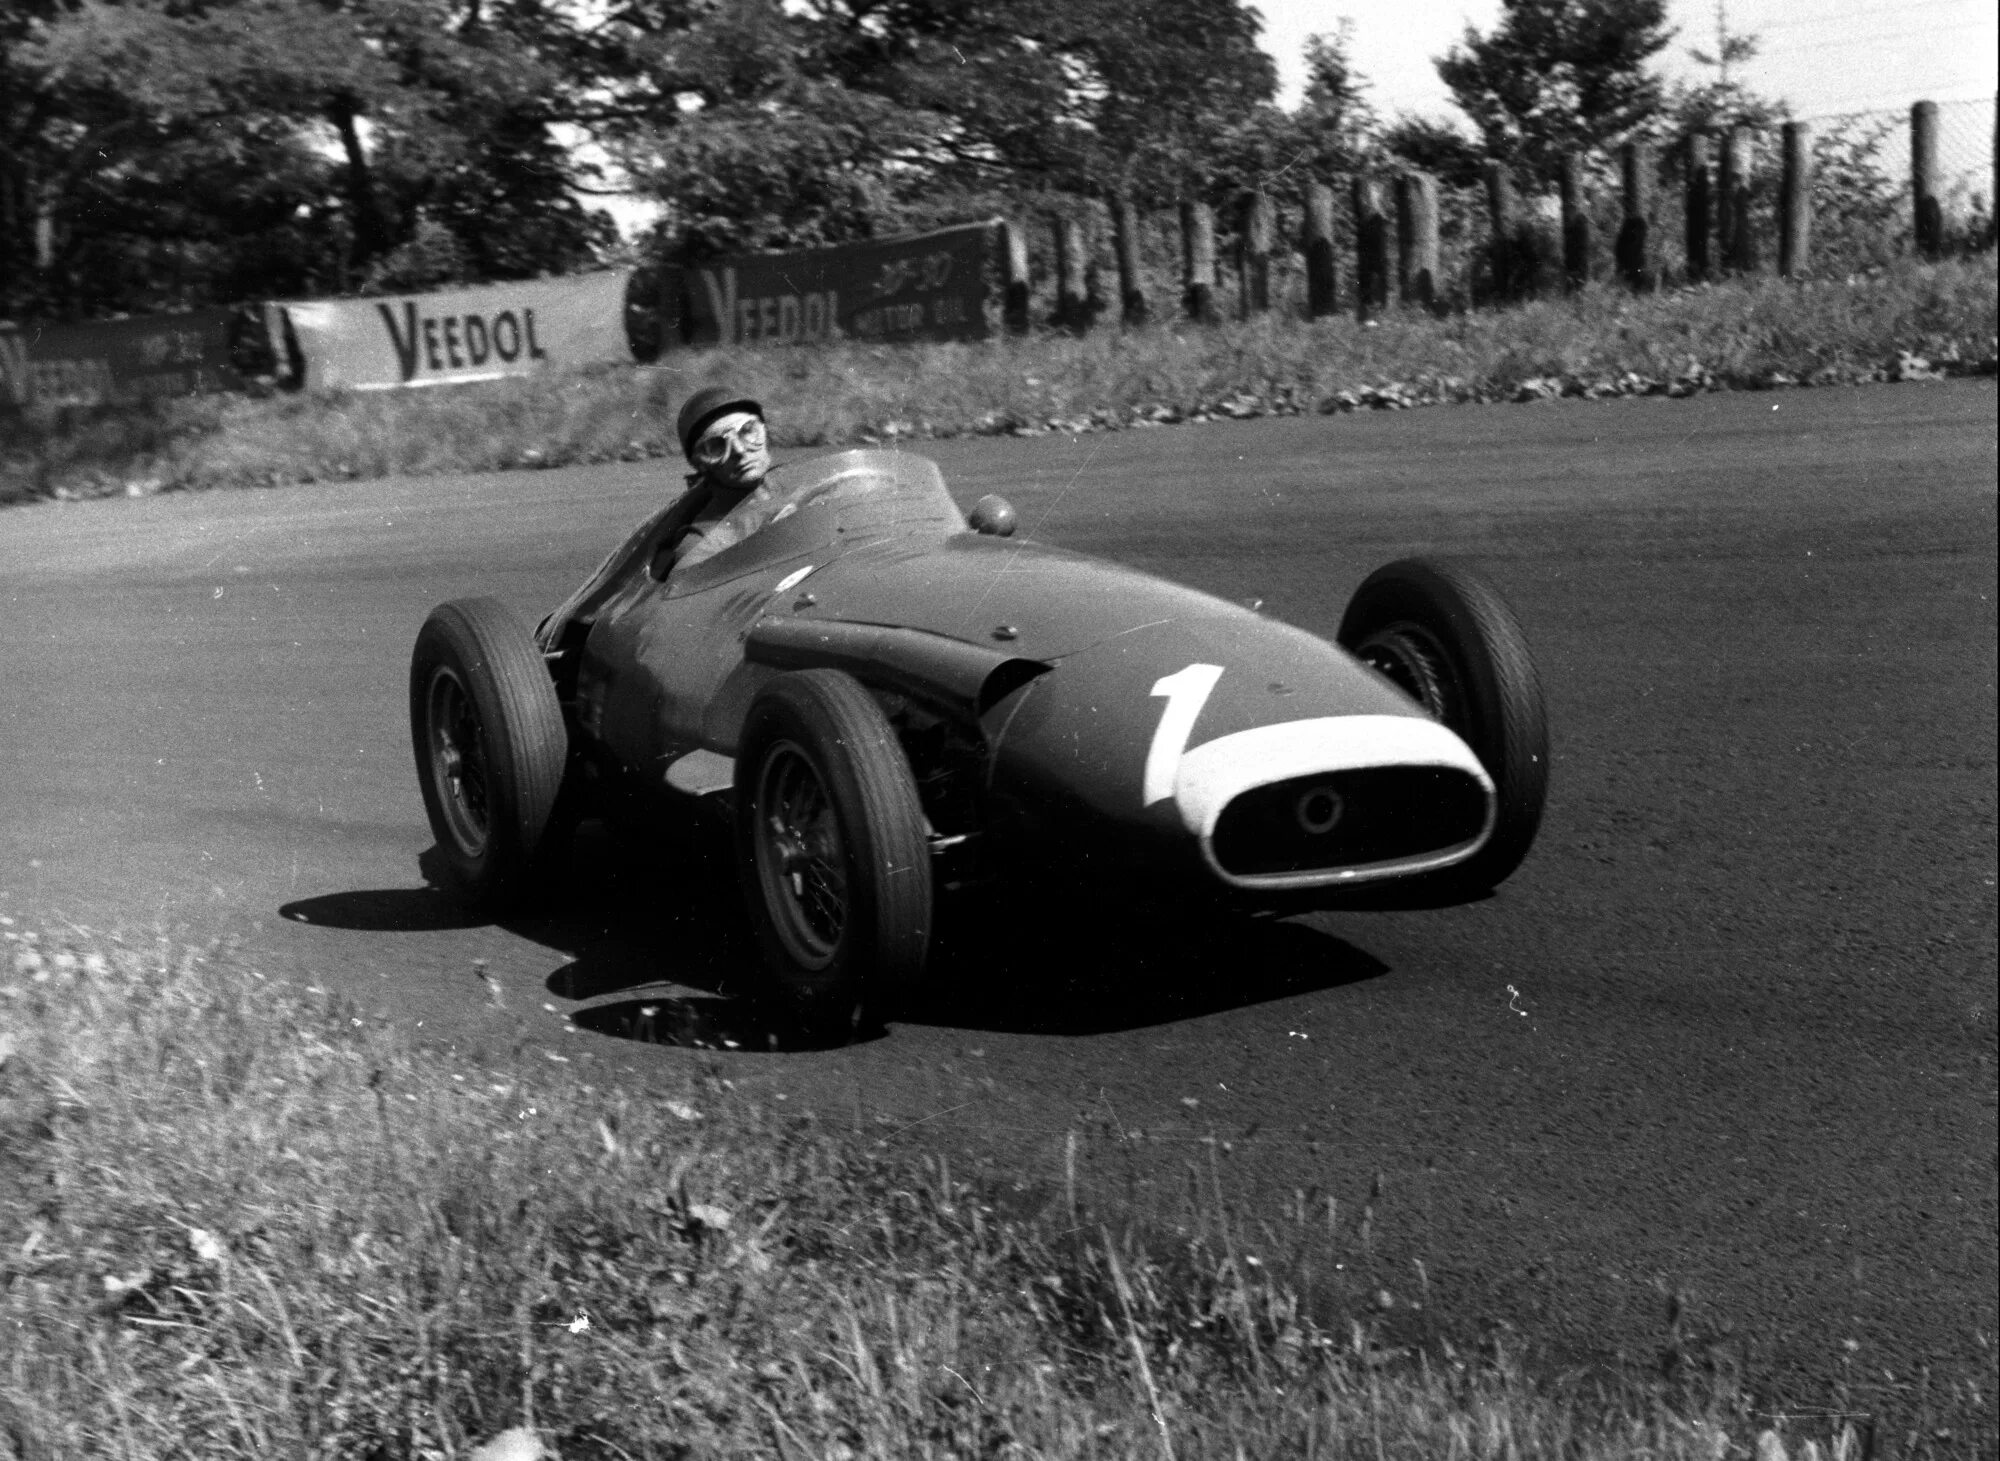 Хуан мануэль фанхио. Maserati 250f 1957. Fangio 1957. Фанхио гонщик.